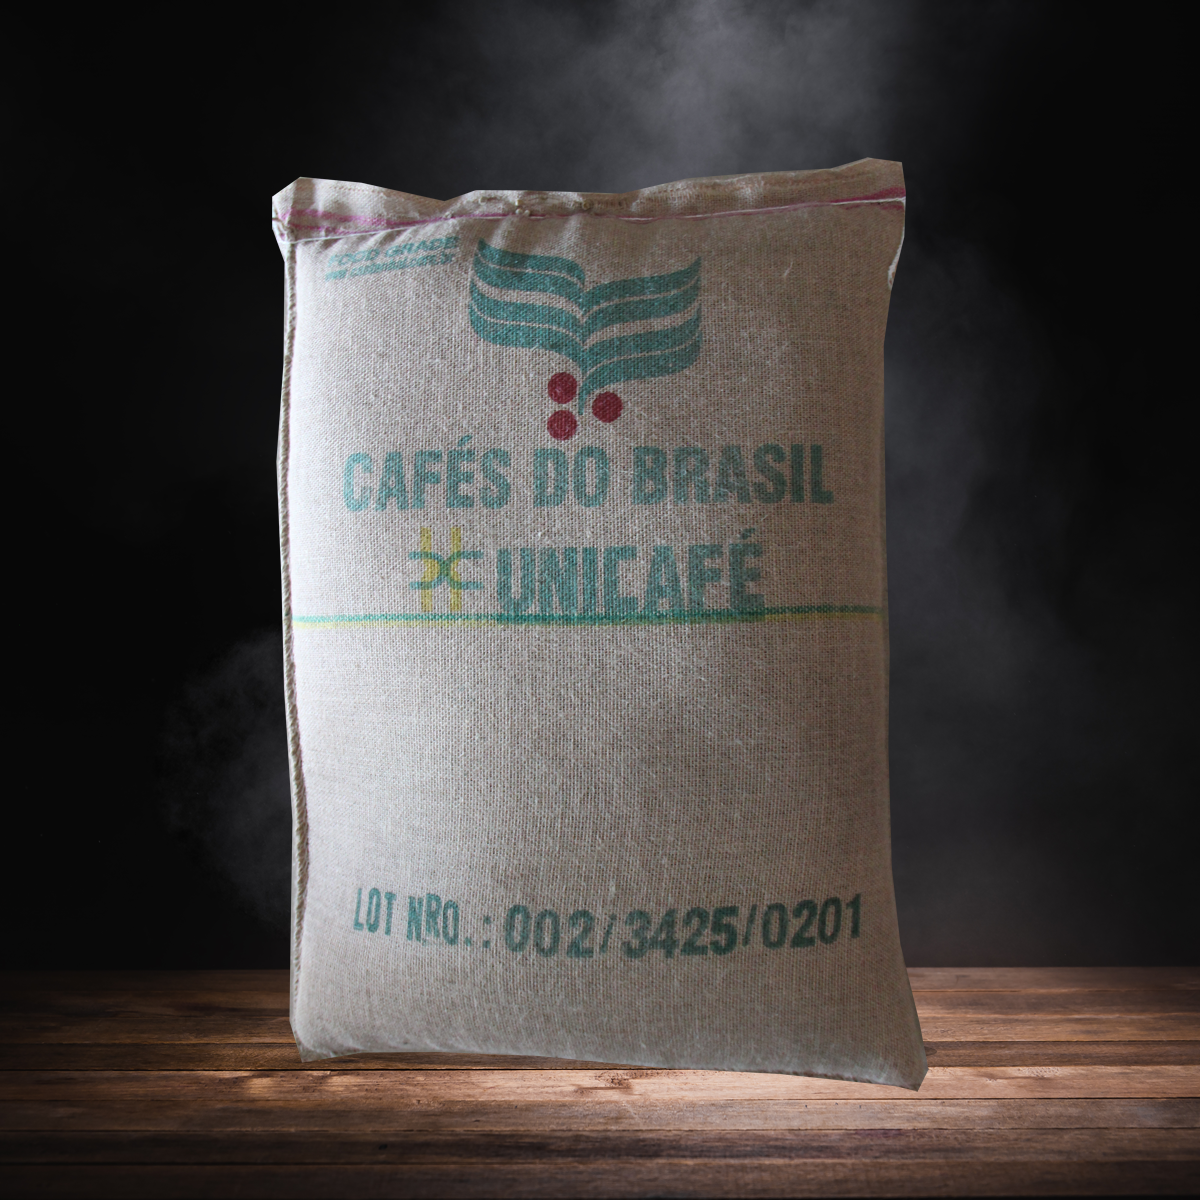 Unicafe Brezilya Rio Minas 17/18 Çiğ Kahve 60 Kg